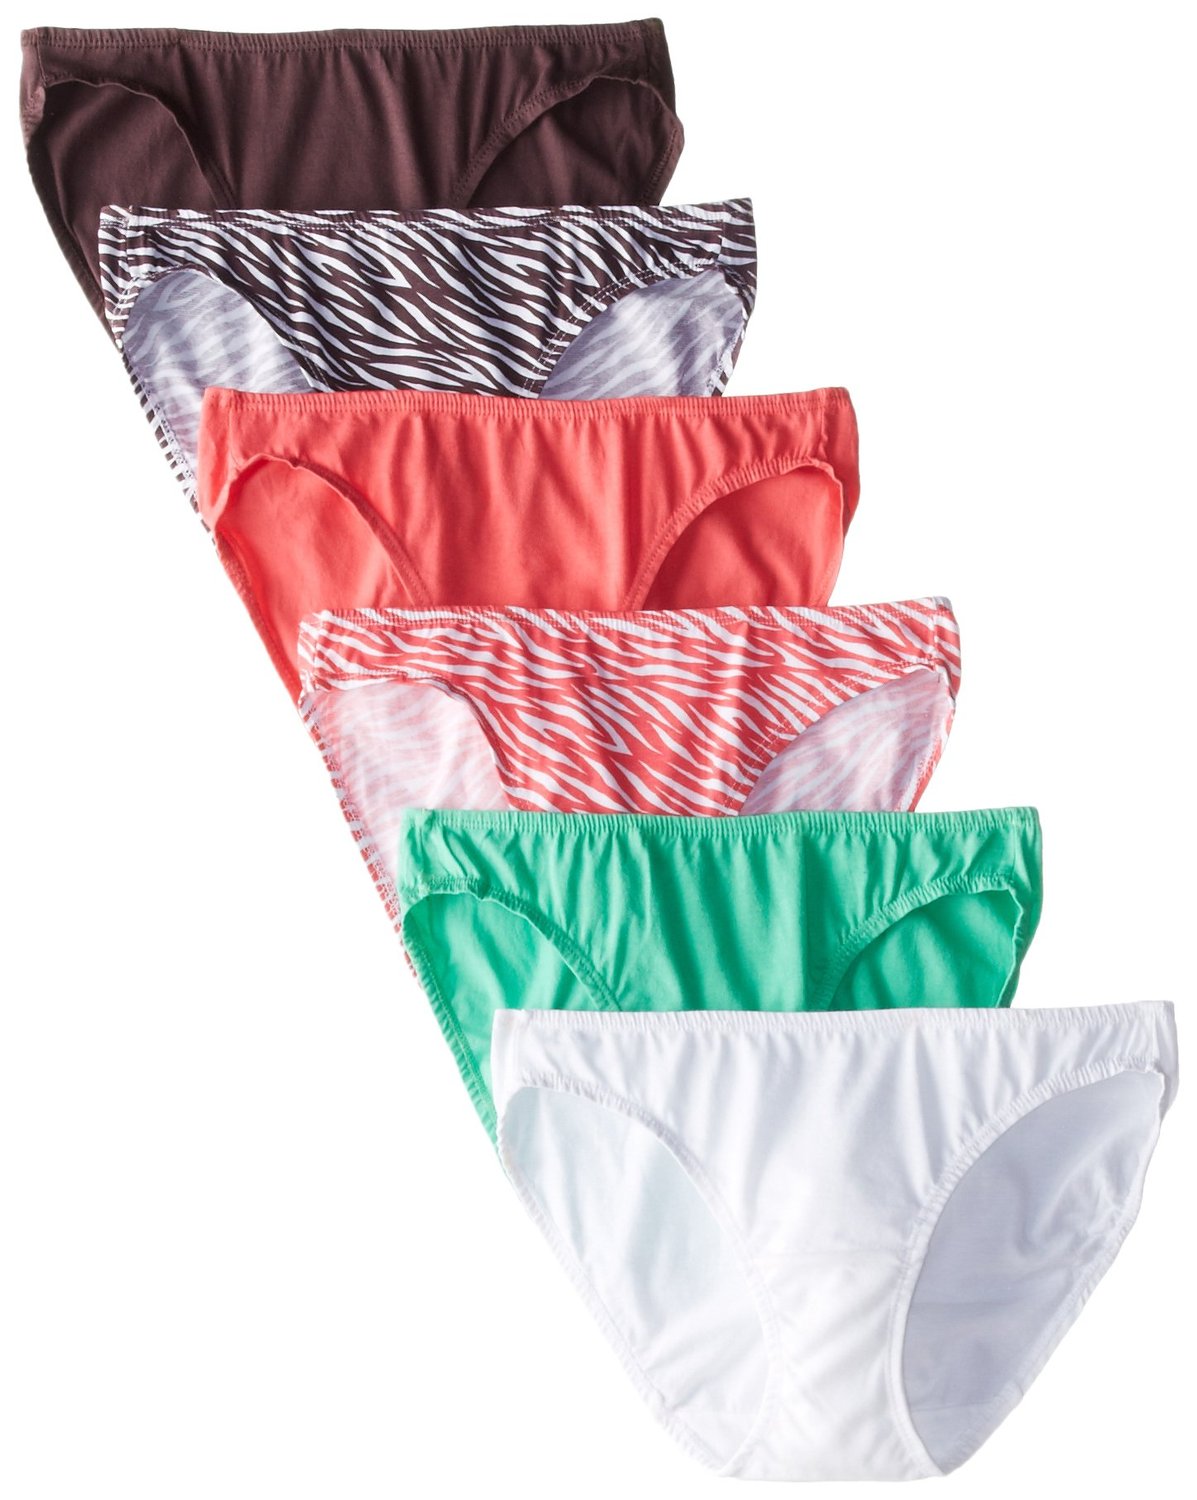 Women's Assorted Cotton Bikini Panties, 6 Pack